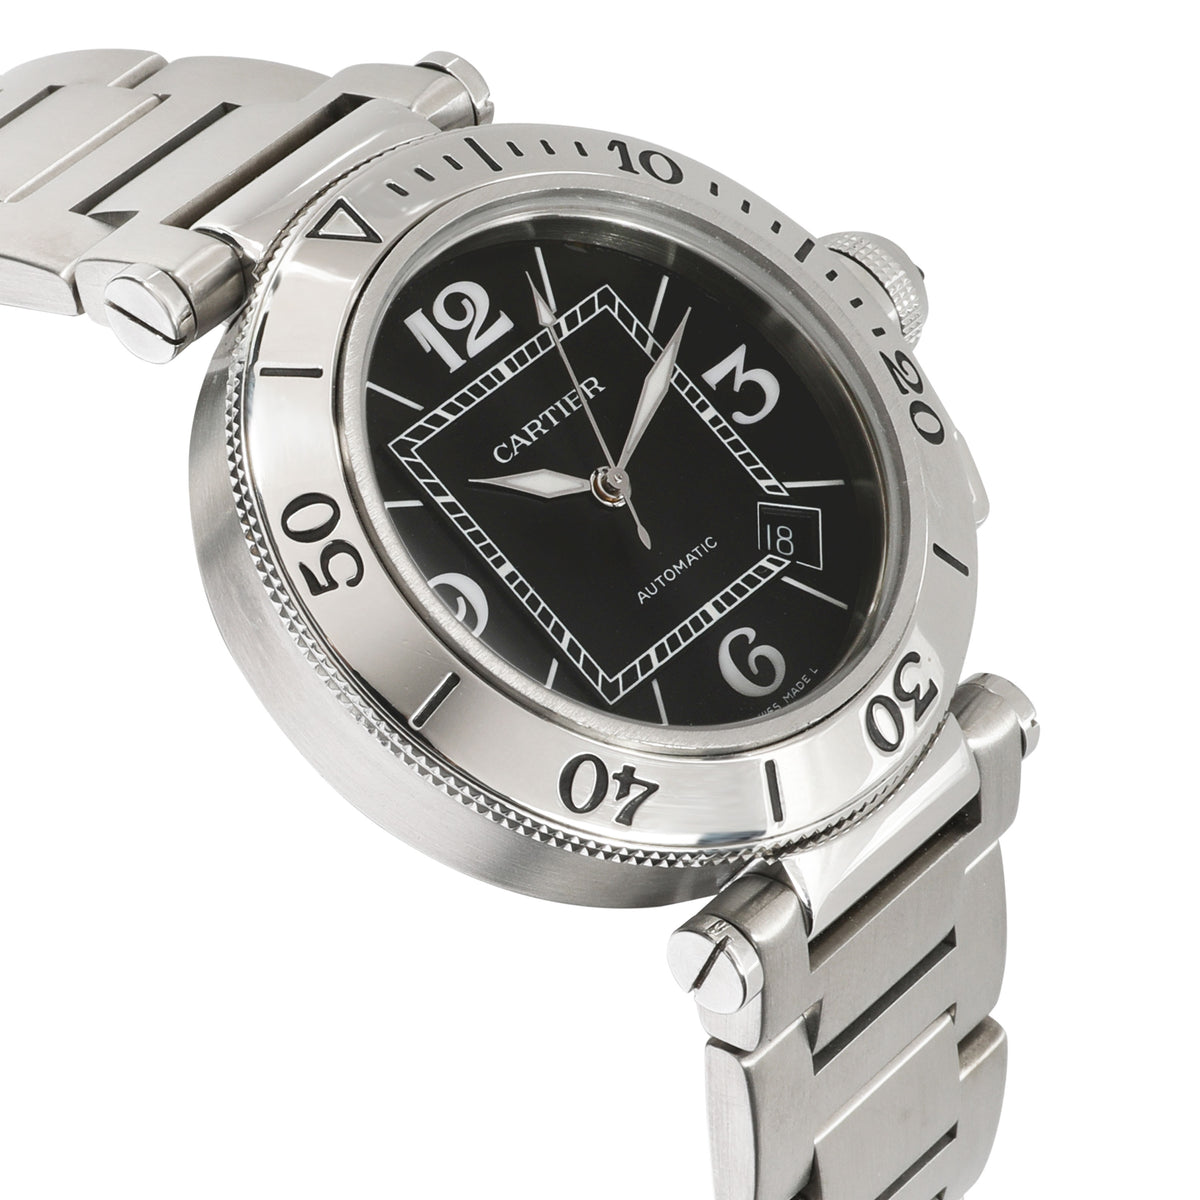 Cartier Pasha Seatimer W31077M7 Men's Watch in  Stainless Steel